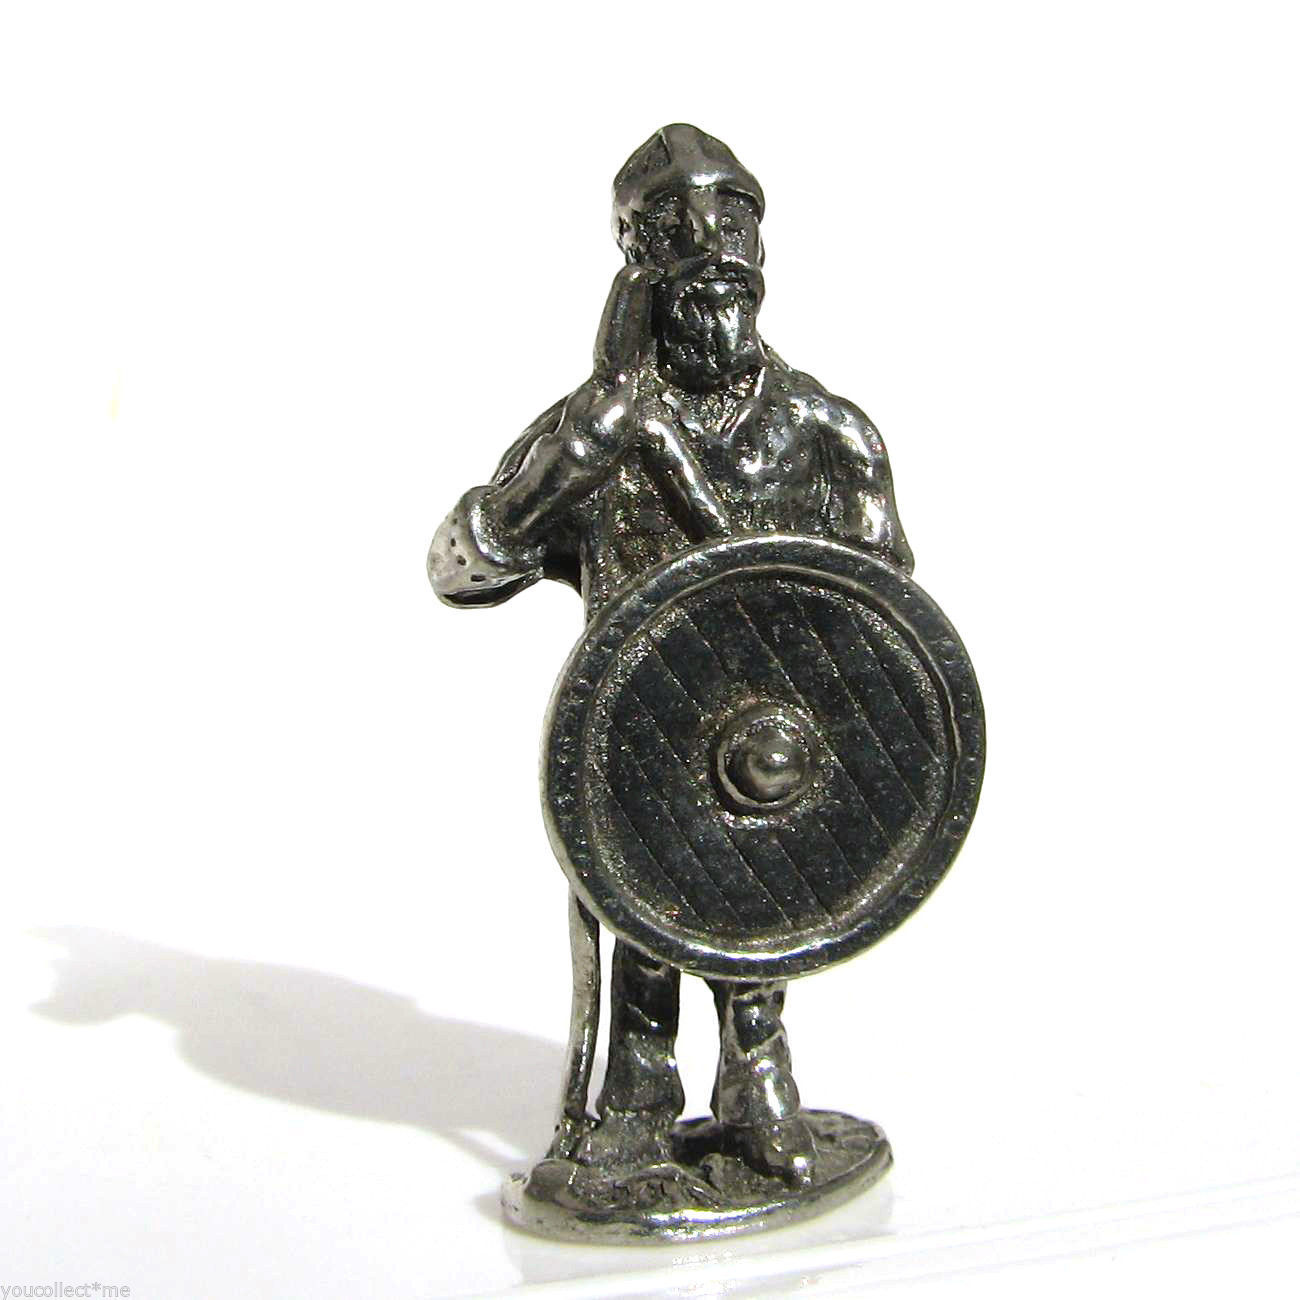 Viking #4 Kinder Surprise Size Metal Soldier Figurine Vintage Toy 4 cm - $6.43